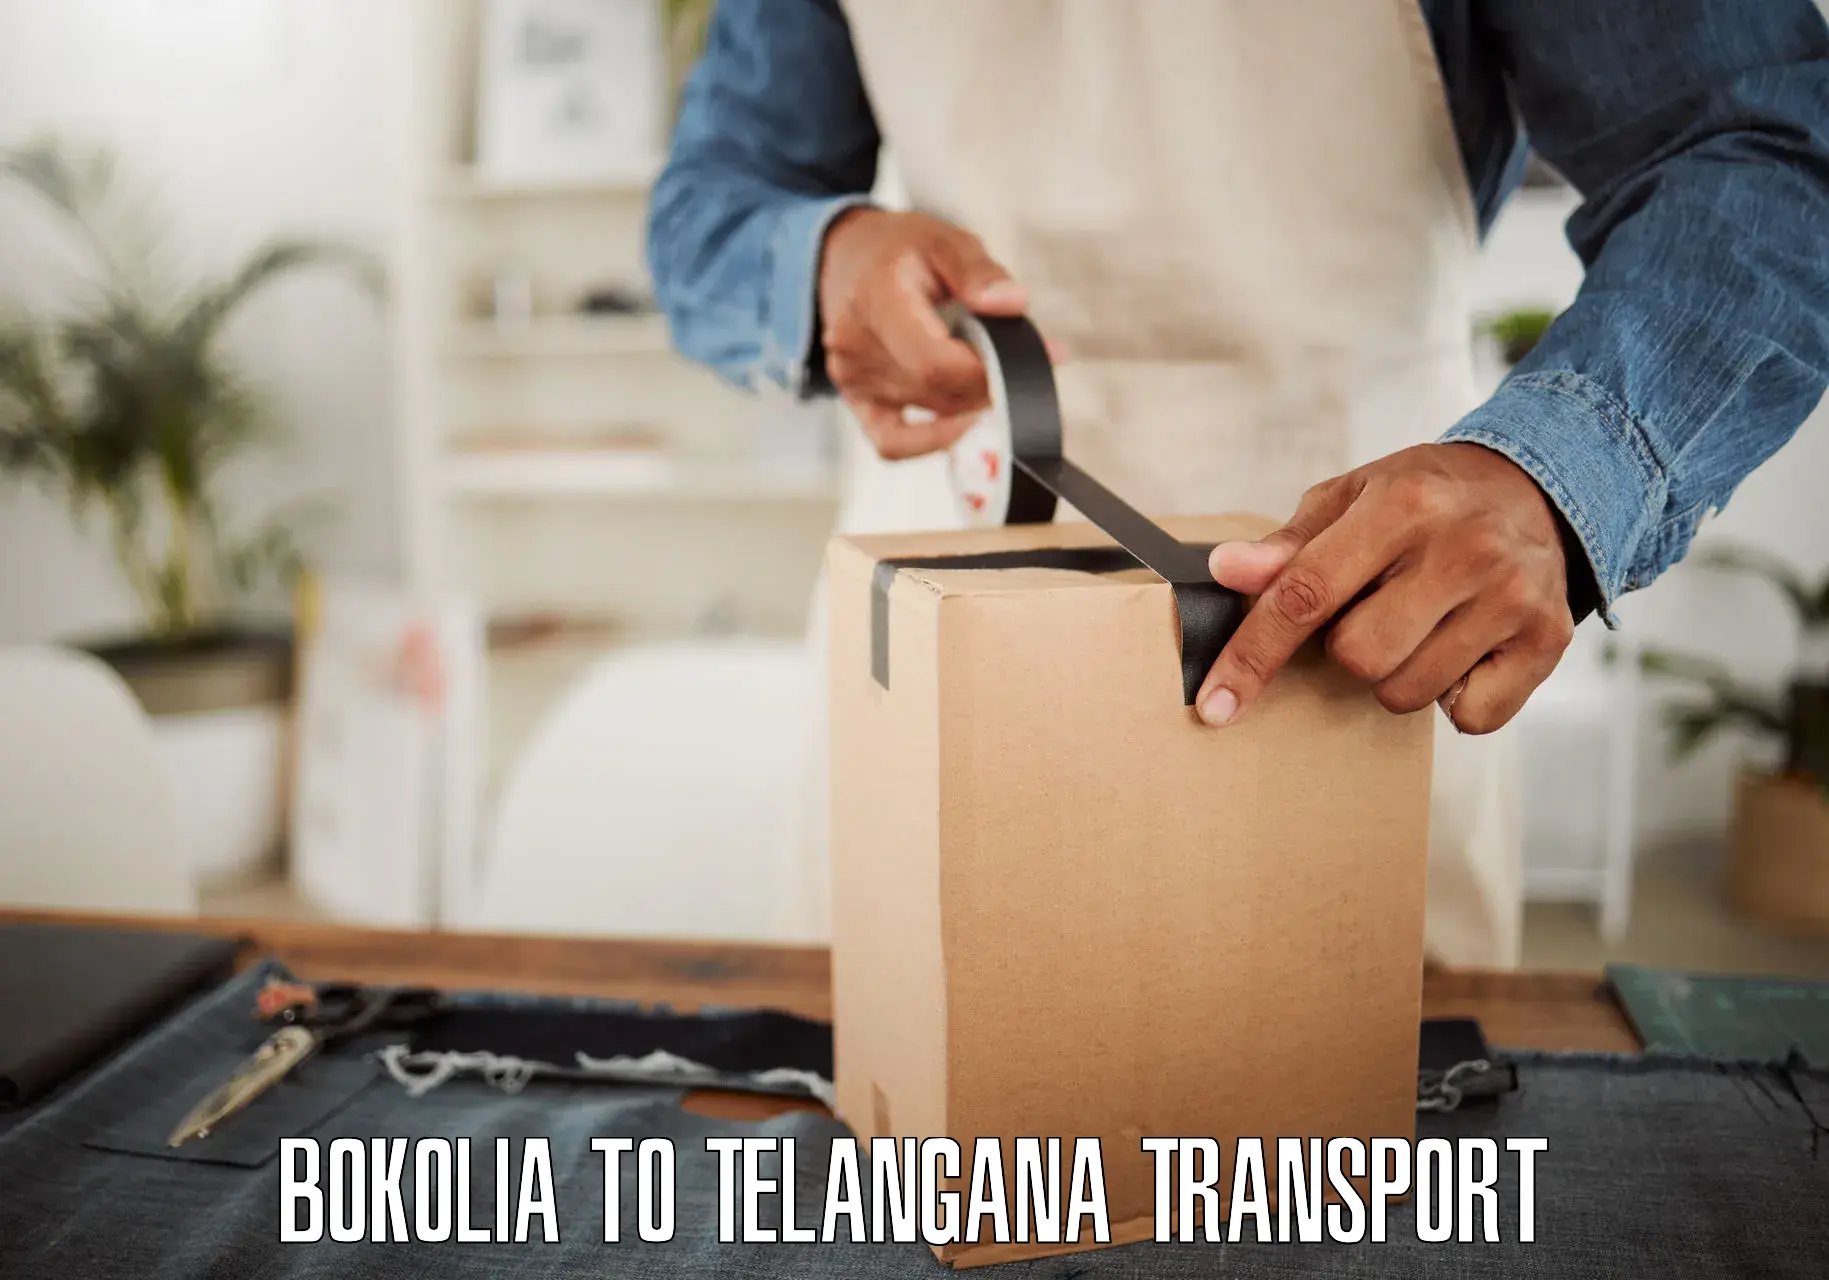 Transport in sharing Bokolia to Bellampalli